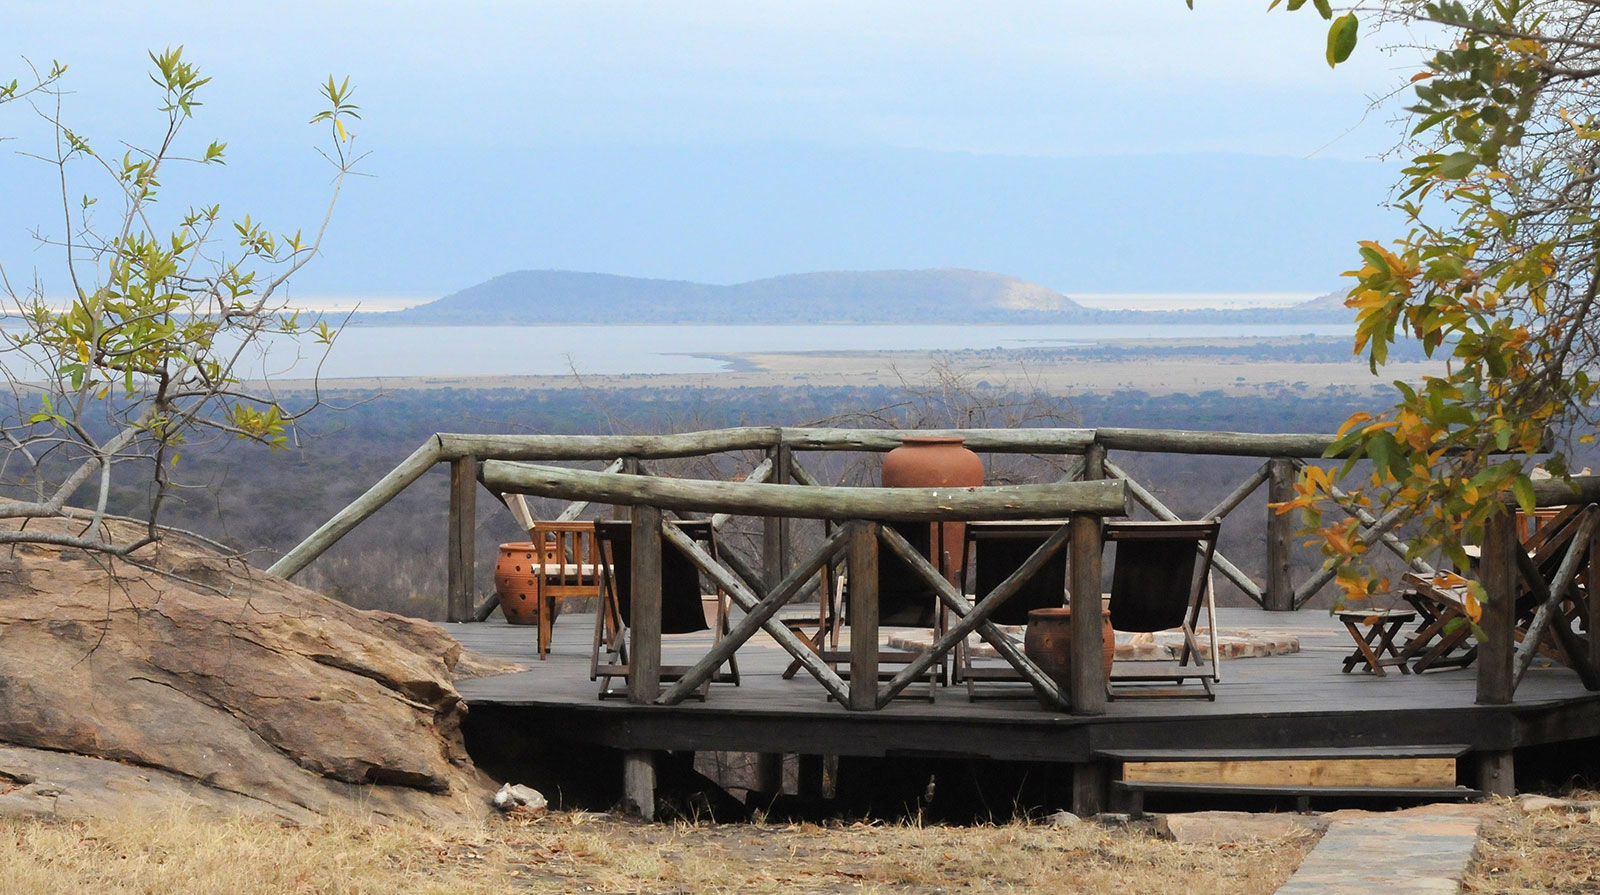 Maweninga Camp - Un posto tranquillo dove rigenerarsi
